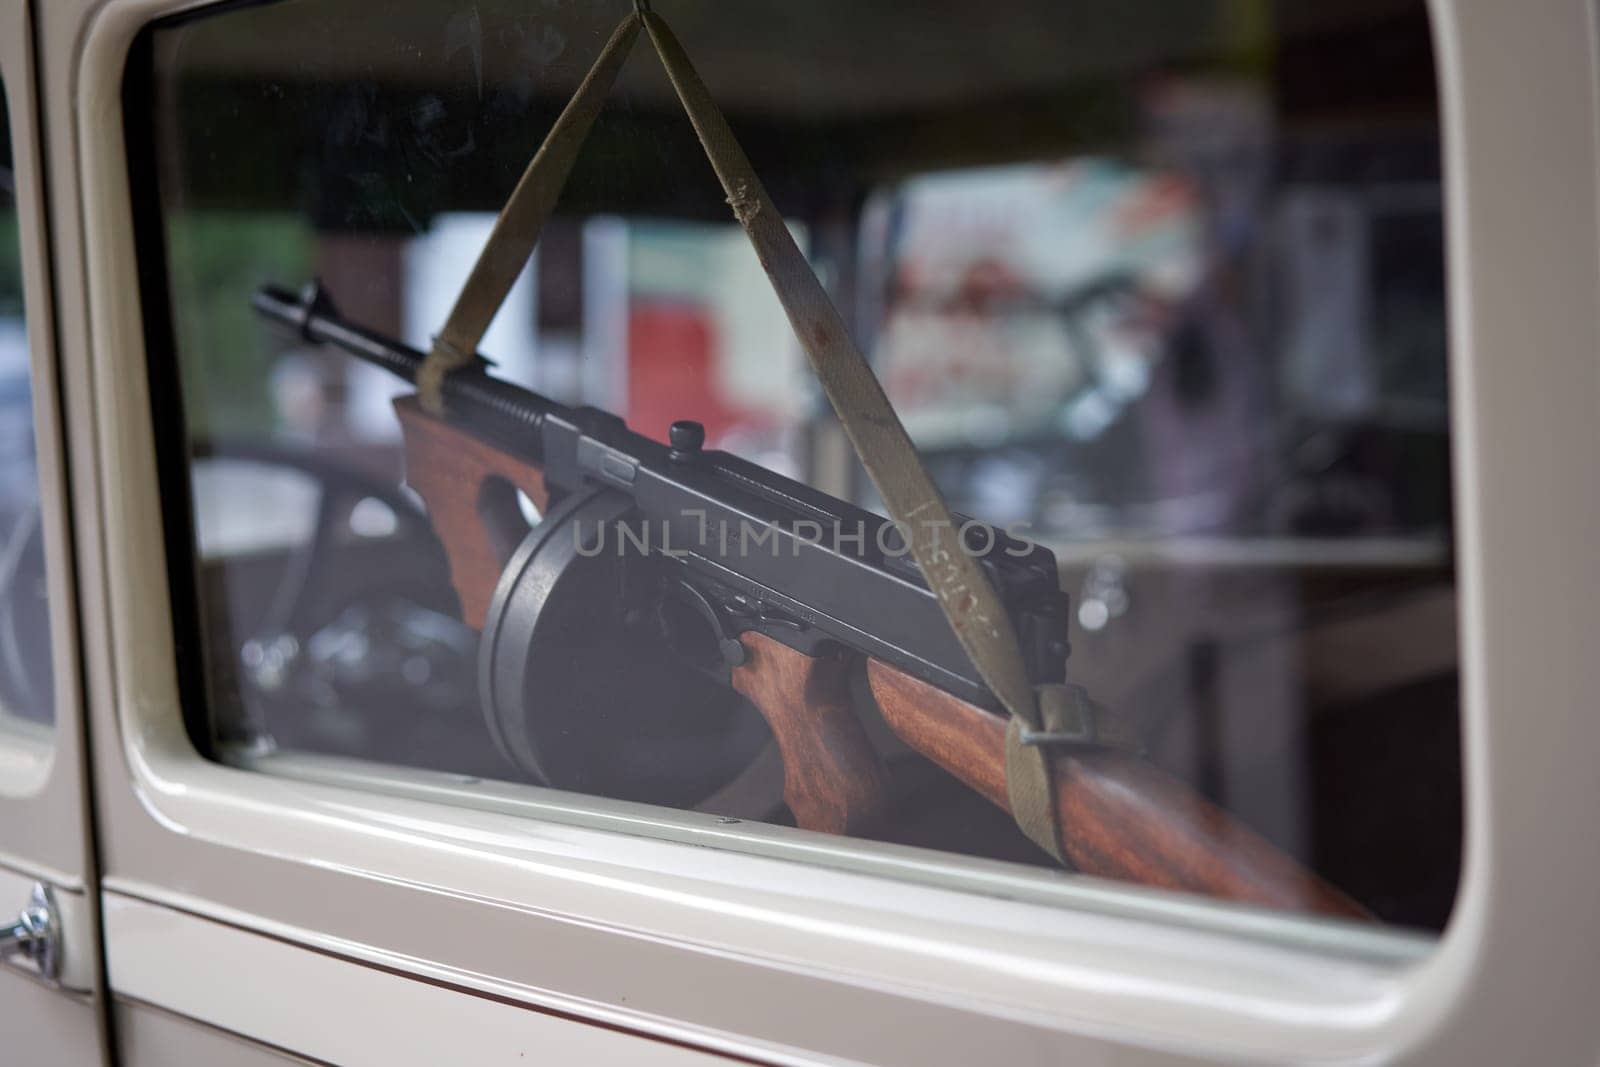 Closeup of RPD machine gun hanging inside car window. Powerful firearm against the backdrop of the car interior.